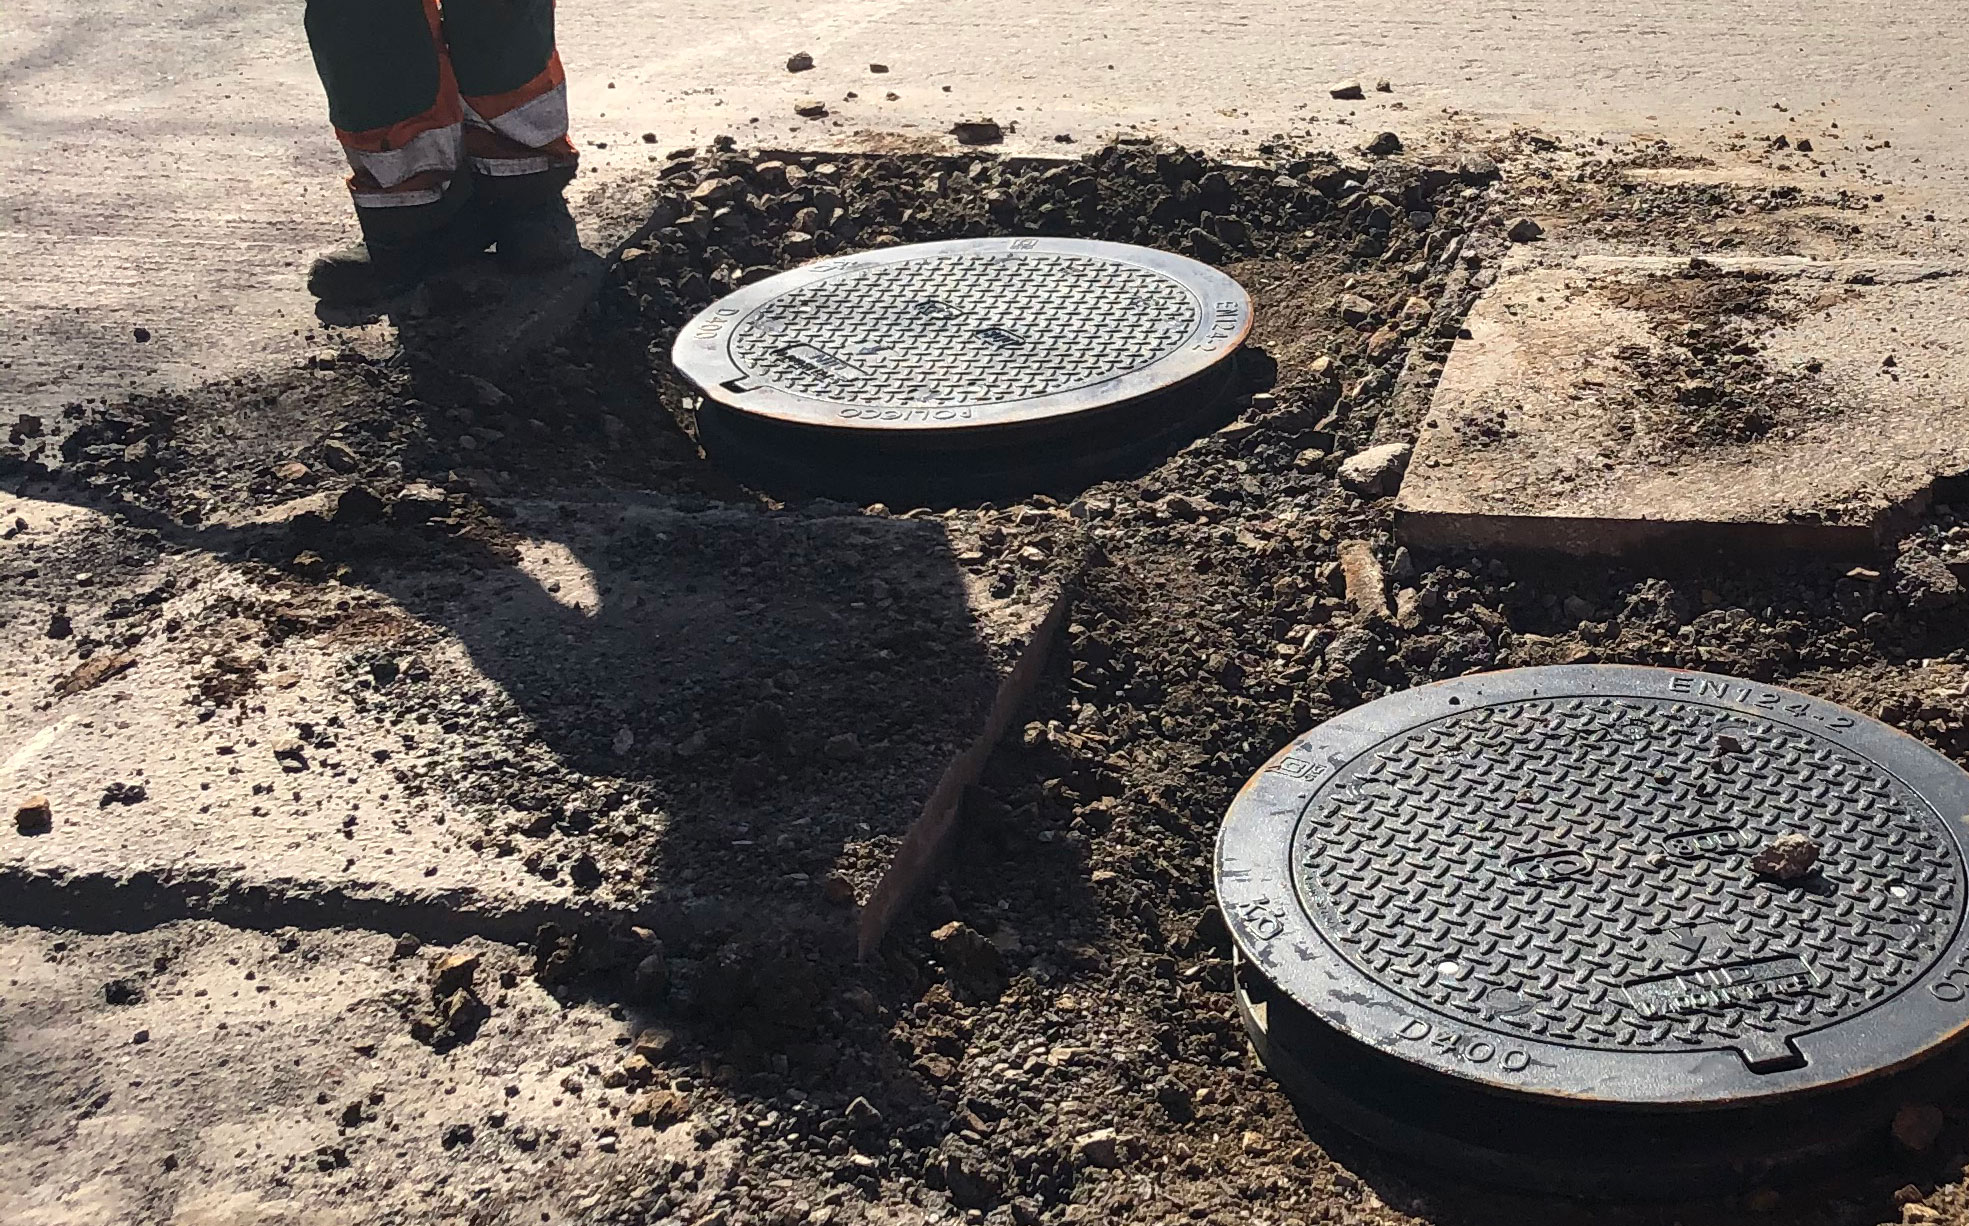 Manhole covers made smart